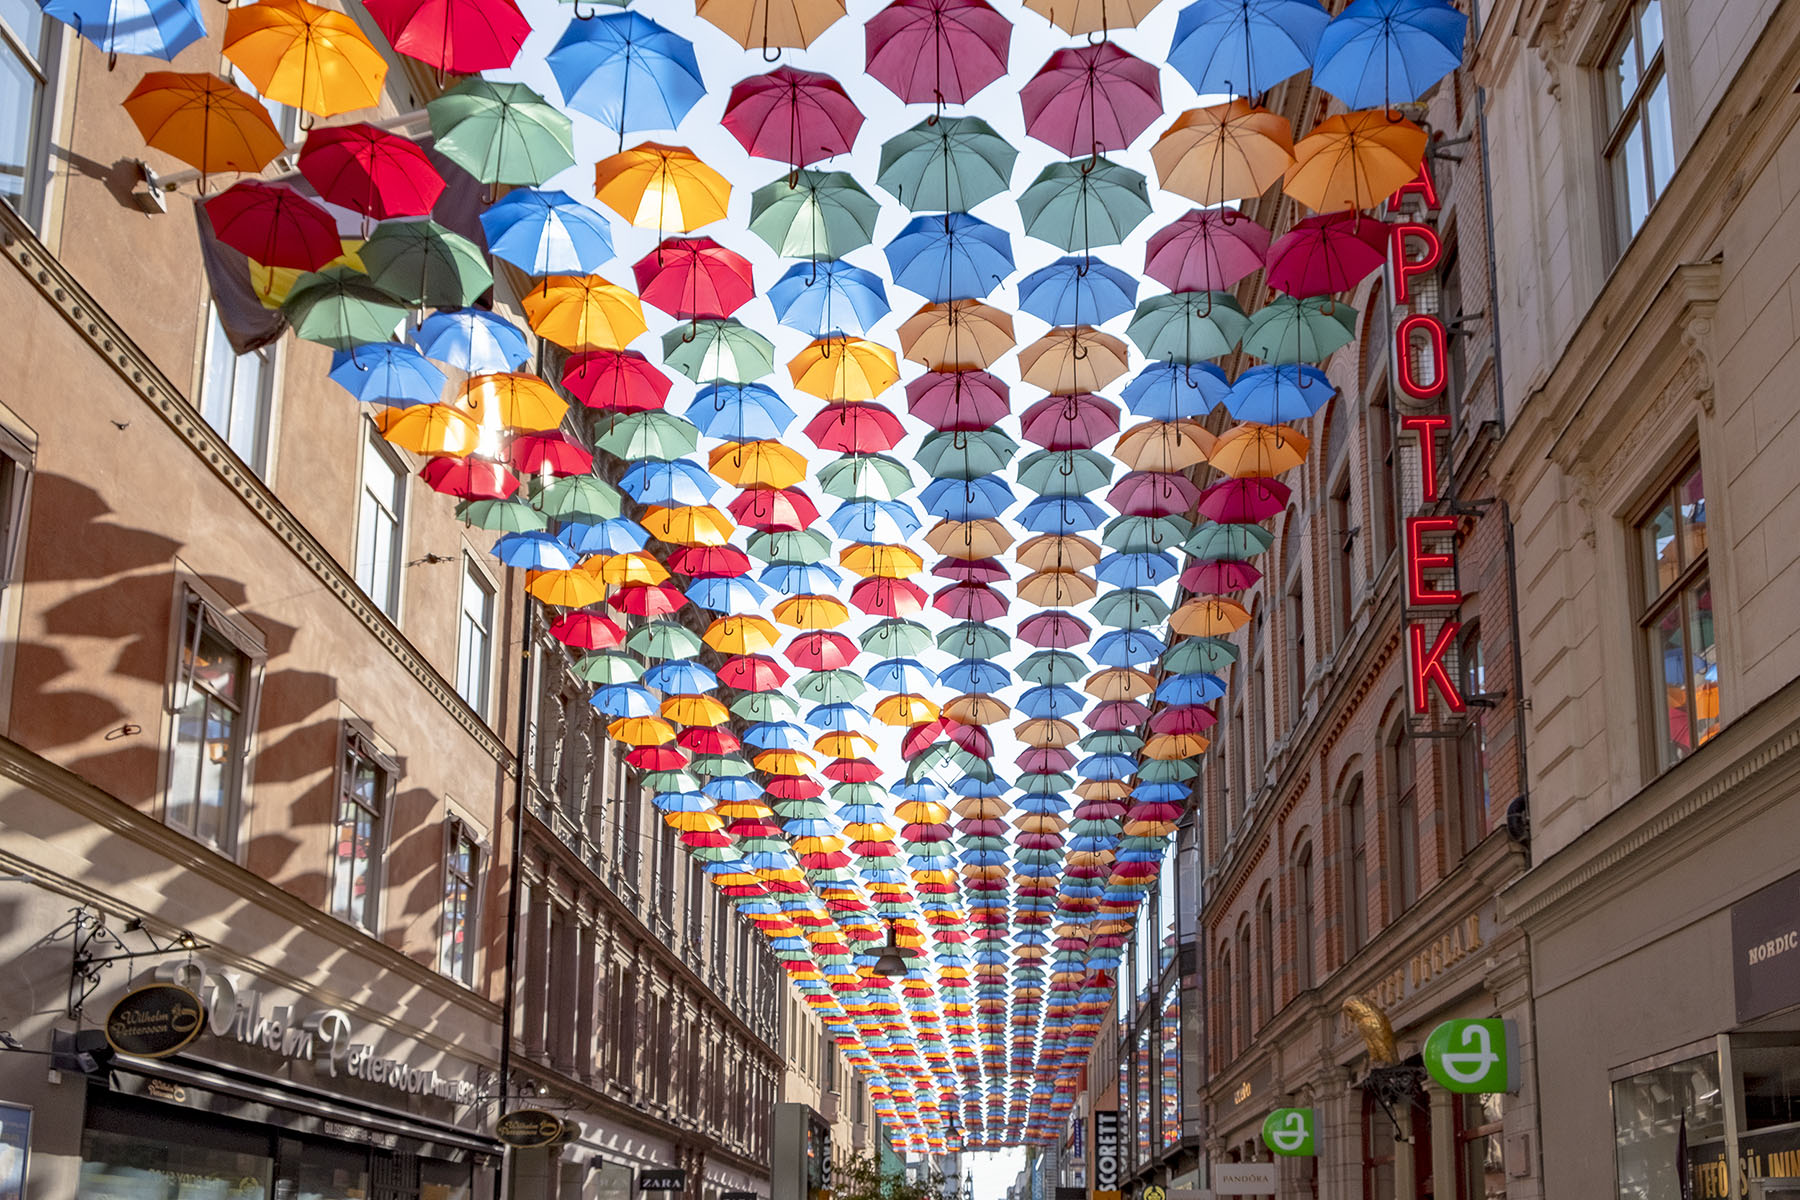 Umbrella Sky Projekt paraplyer på Drottninggatan i Stockholm